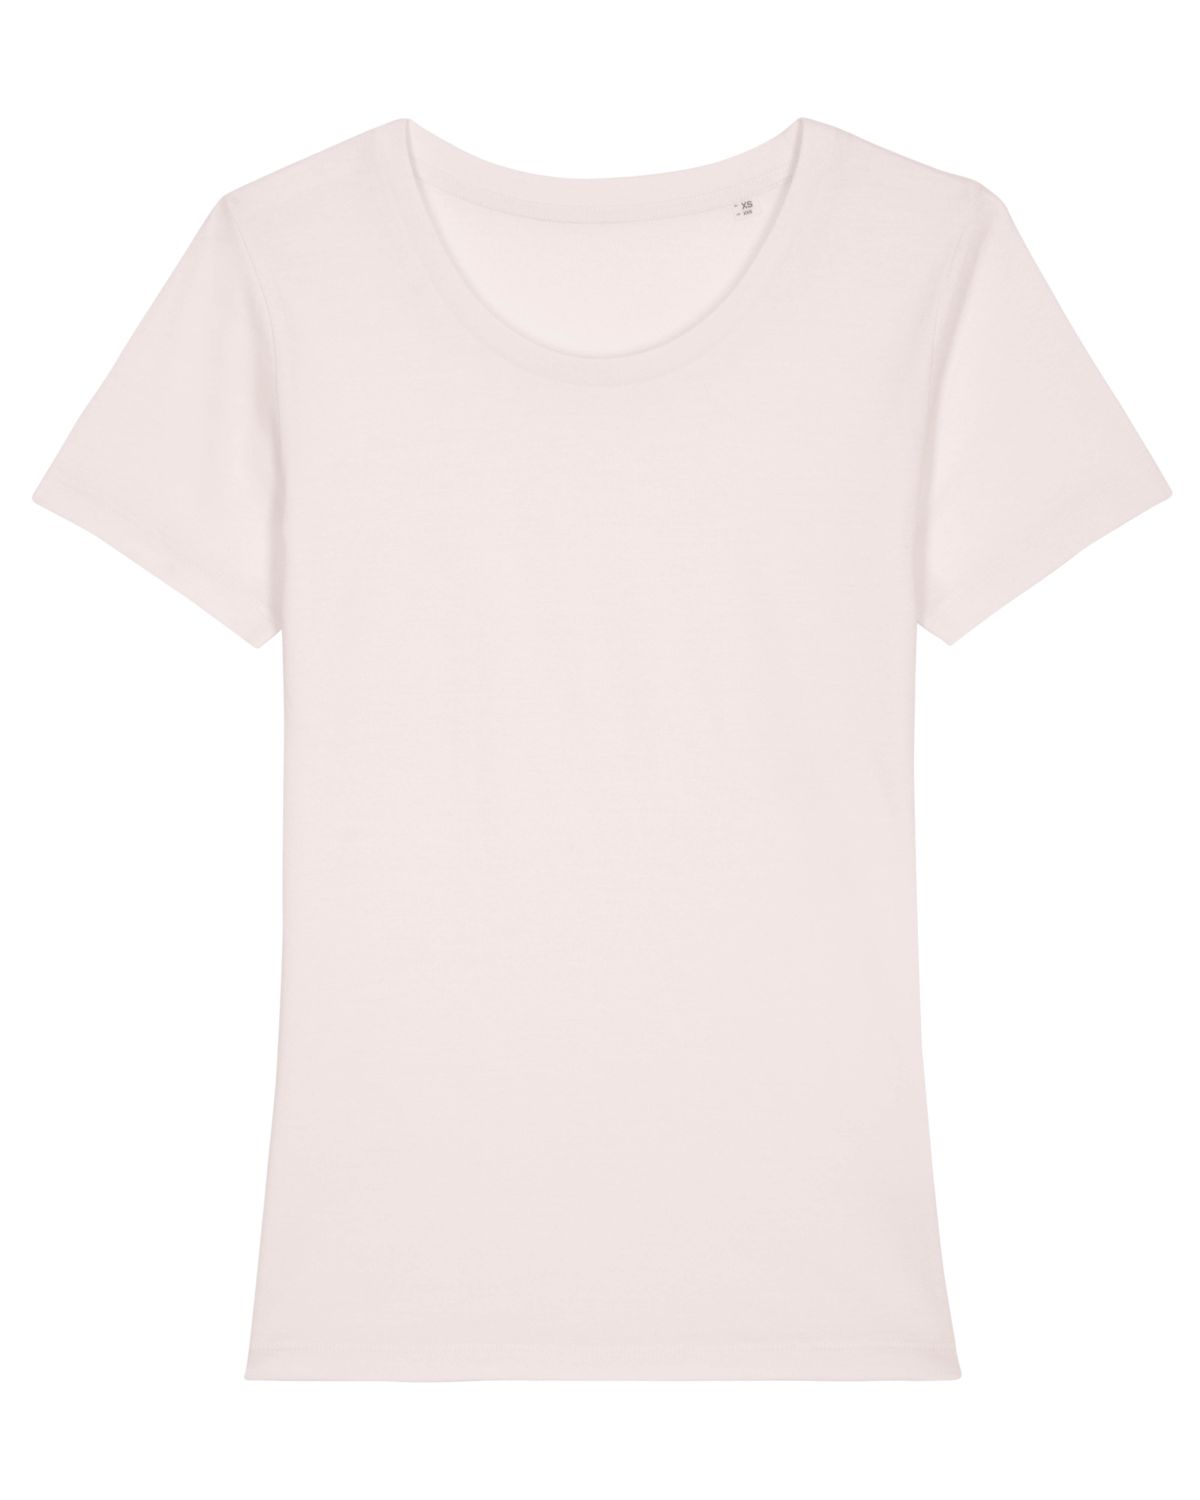 EXPRESSER - t-shirt coton bio femme